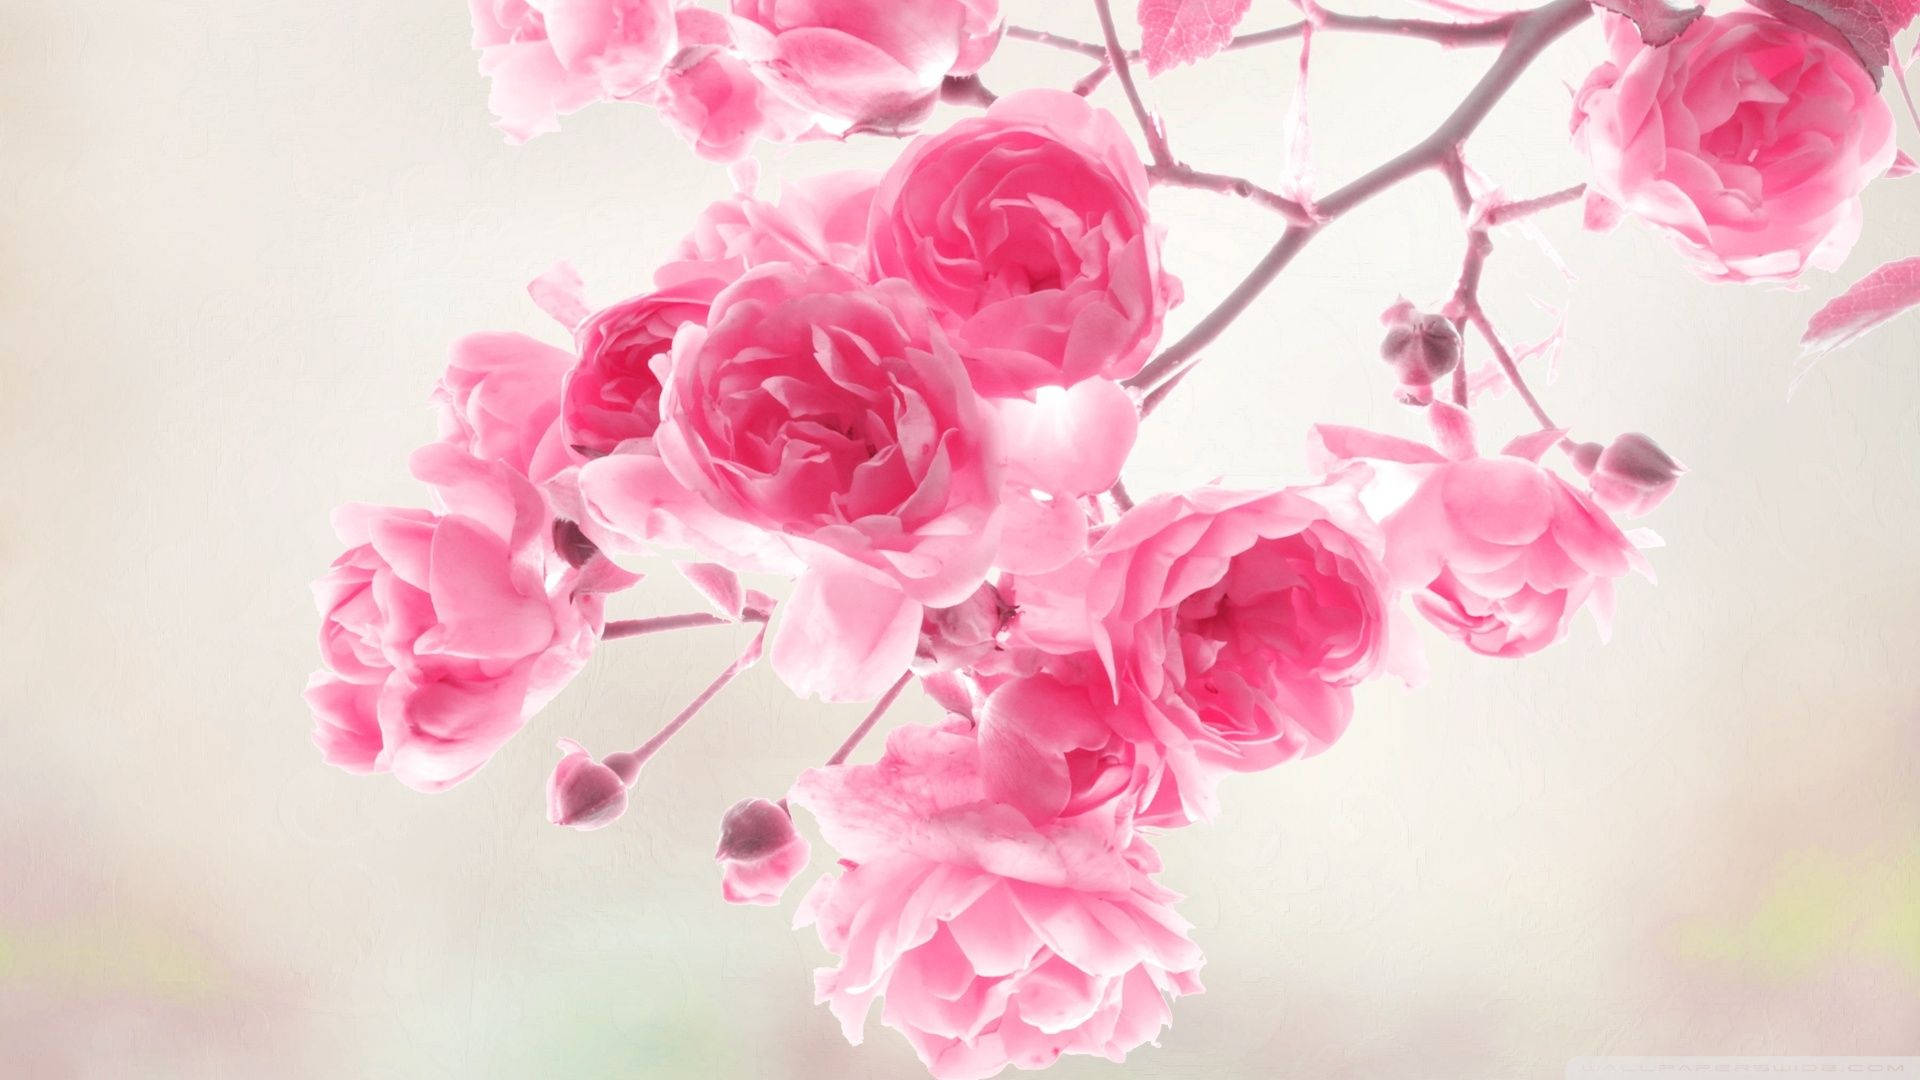 Ramallena De Lindas Flores Rosadas En Pleno Florecimiento Fondo de pantalla